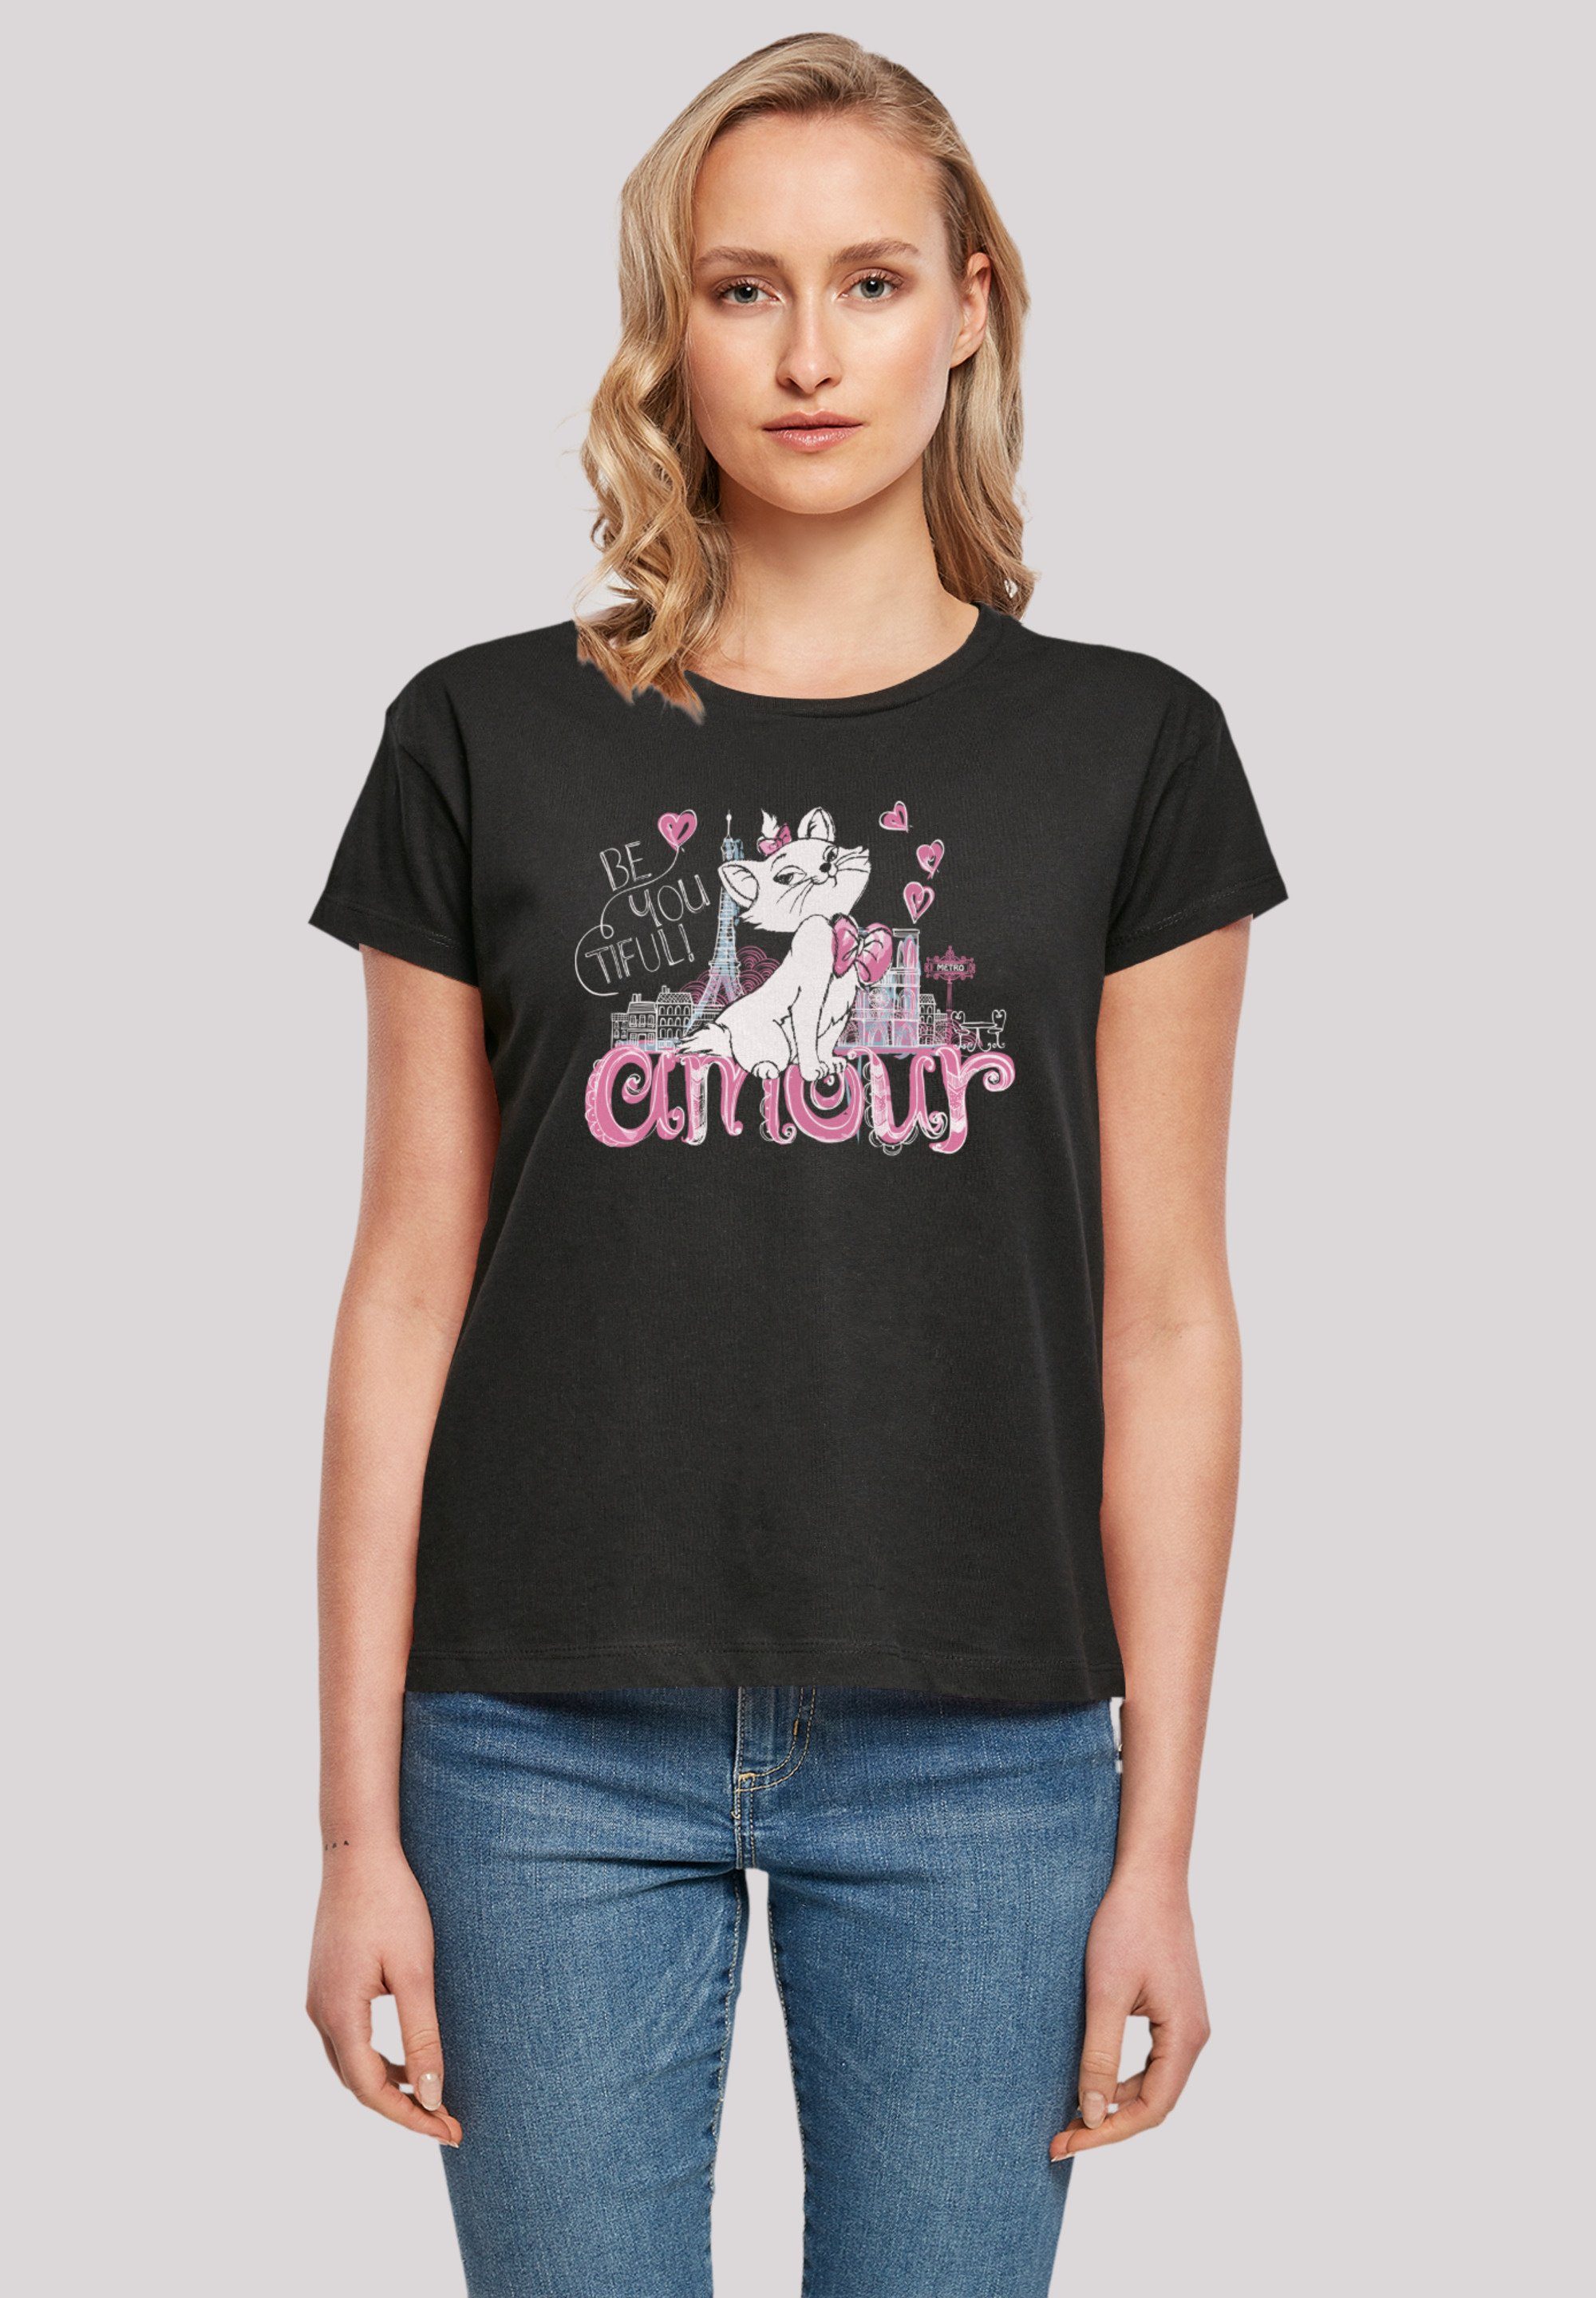 F4NT4STIC T-Shirt Disney Aristocats Amour Premium Qualität